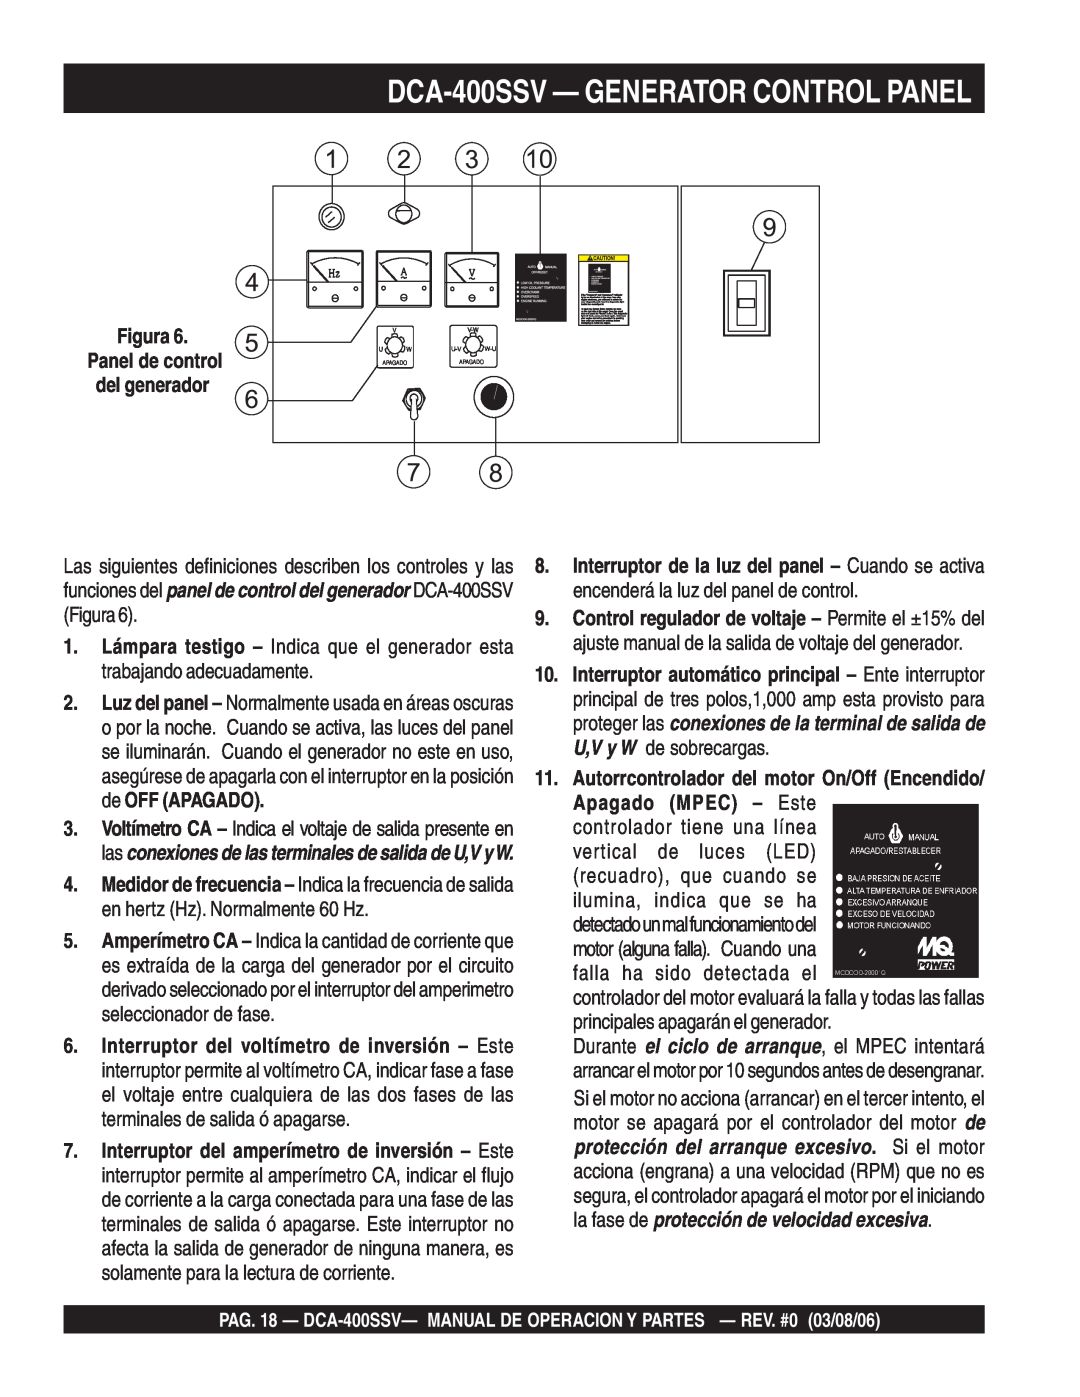 Multiquip operation manual DCA-400SSV— GENERATOR CONTROL PANEL 